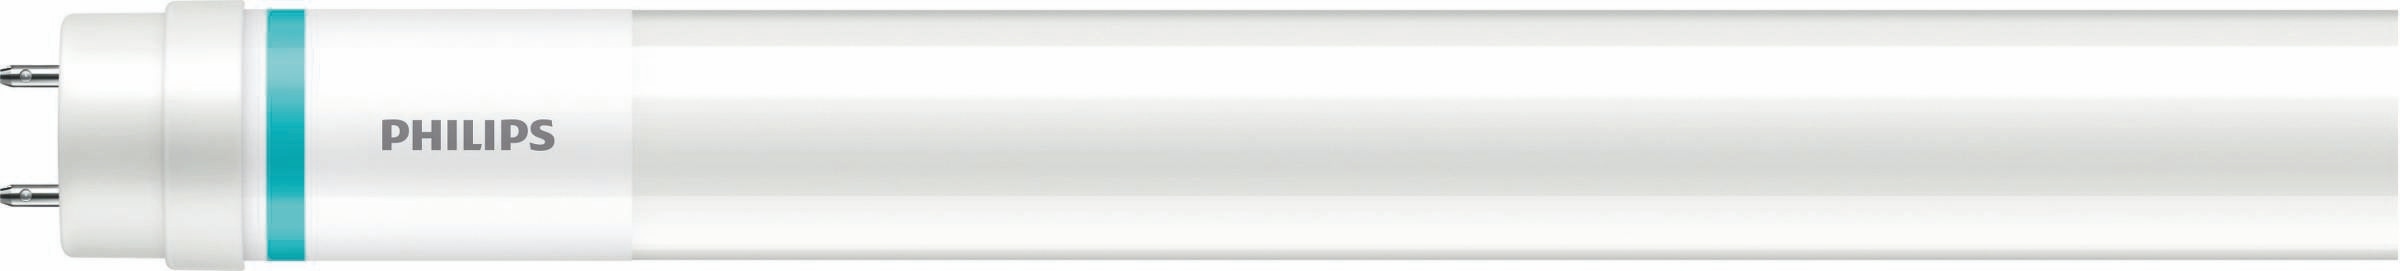 Philips 64679000 MASTER Value LEDtube T8 KVG/VVG/230V 600 mm, 190 °, 8 W, 830, 1000 lm, G13, nicht dimmbar